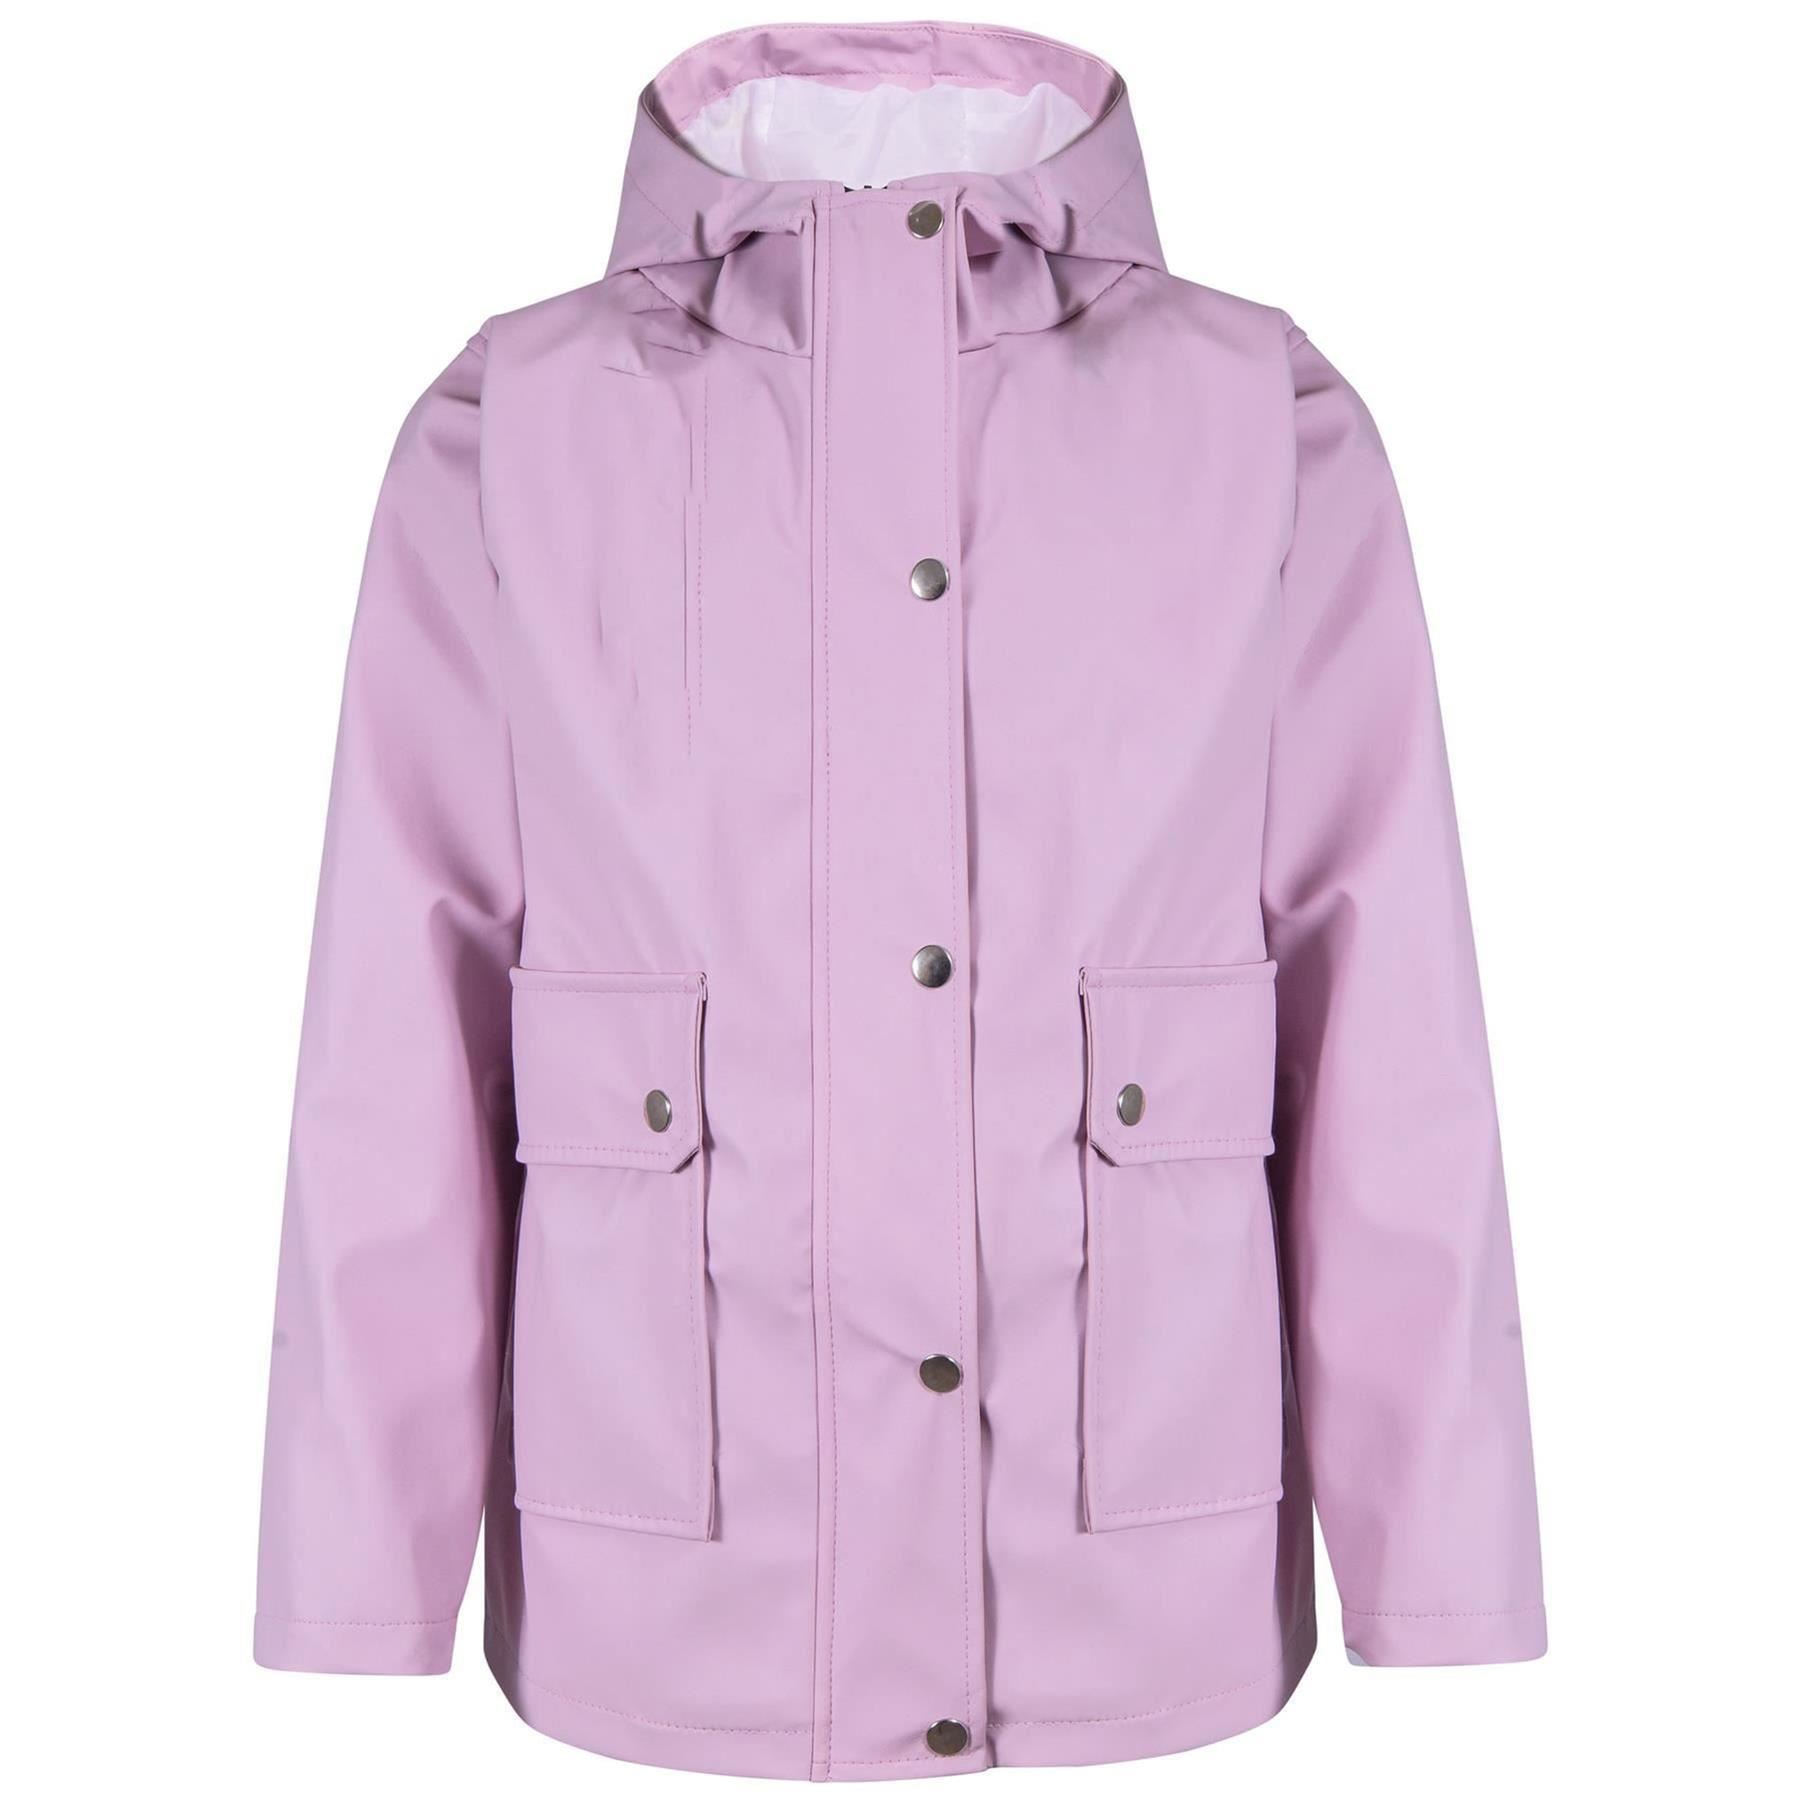 Girls Boys PU Raincoat Jacket Lilac Waterproof Coat